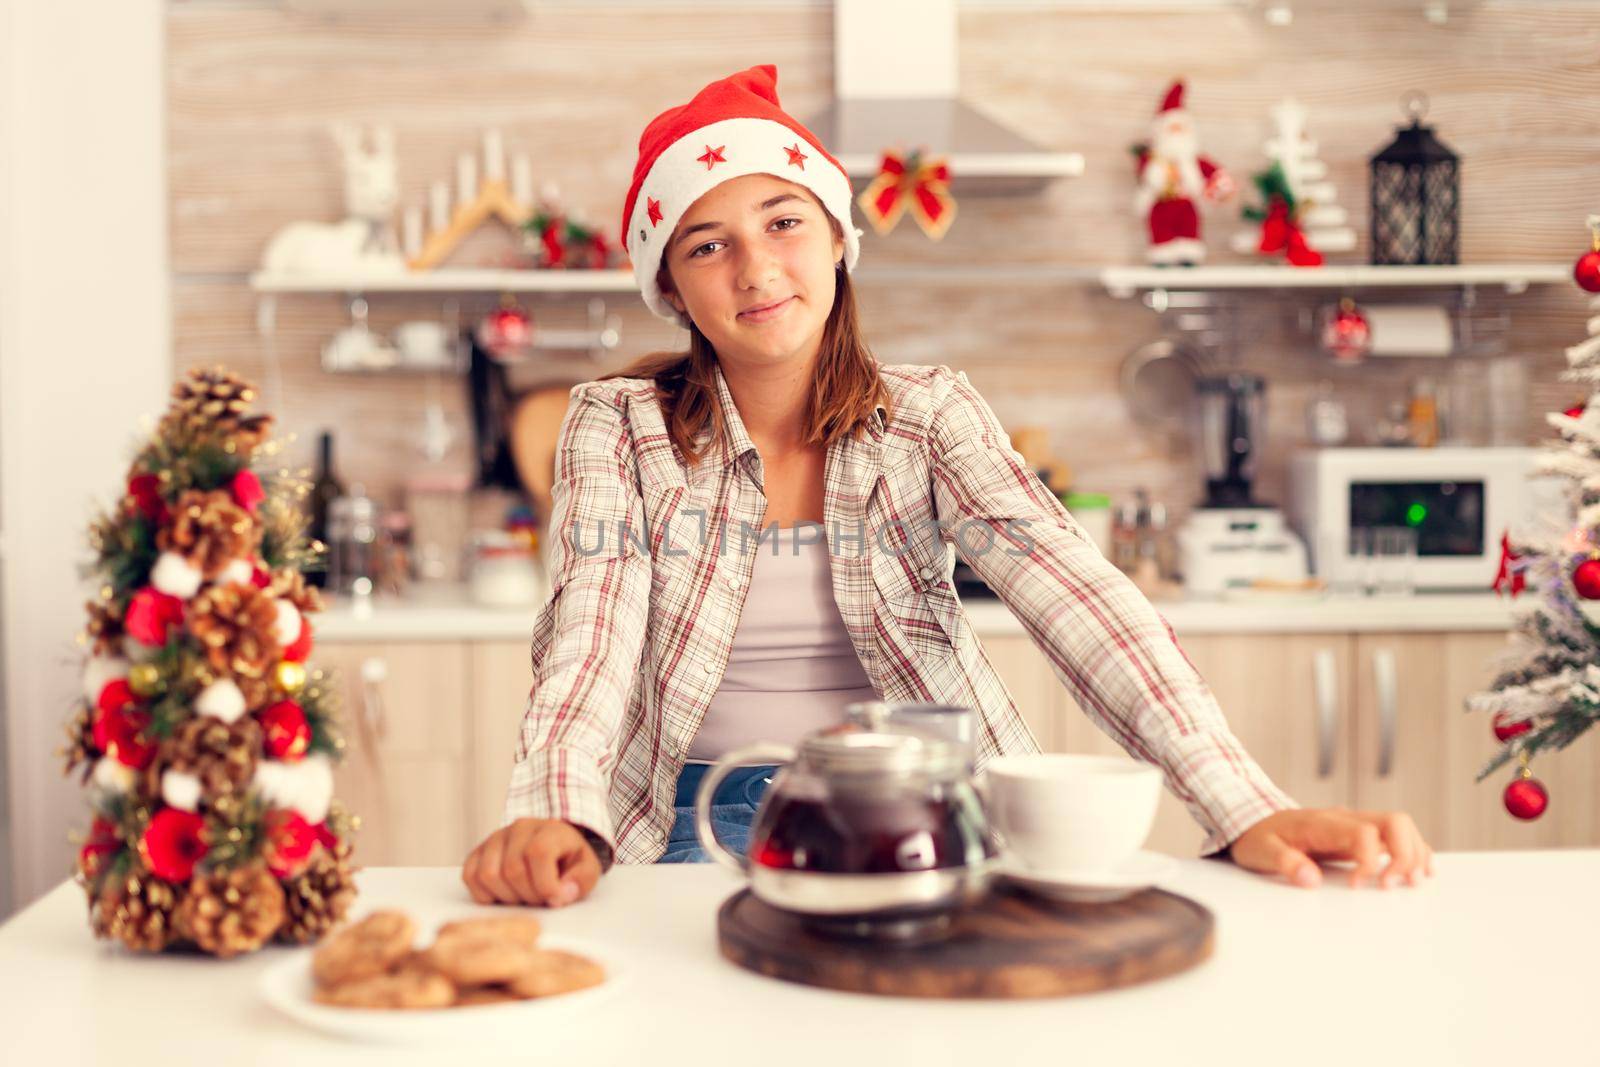 Joyful girl wearing santa heat celebrating christmas in kitchen by DCStudio